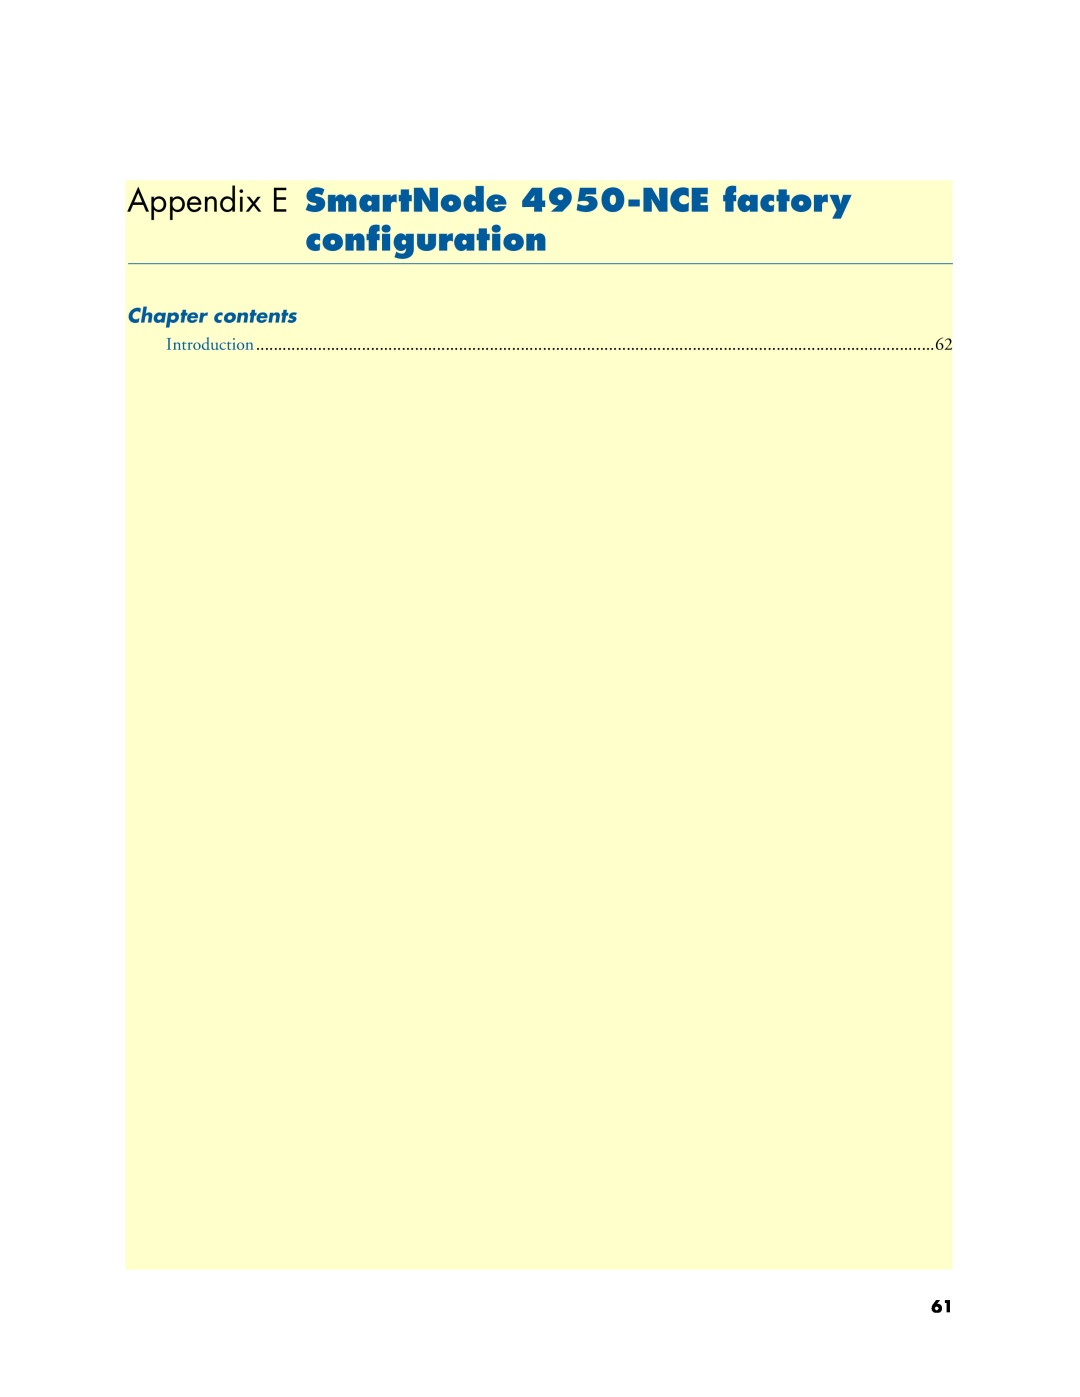 Patton electronic manual Appendix E SmartNode 4950-NCE factory configuration, Chapter contents 